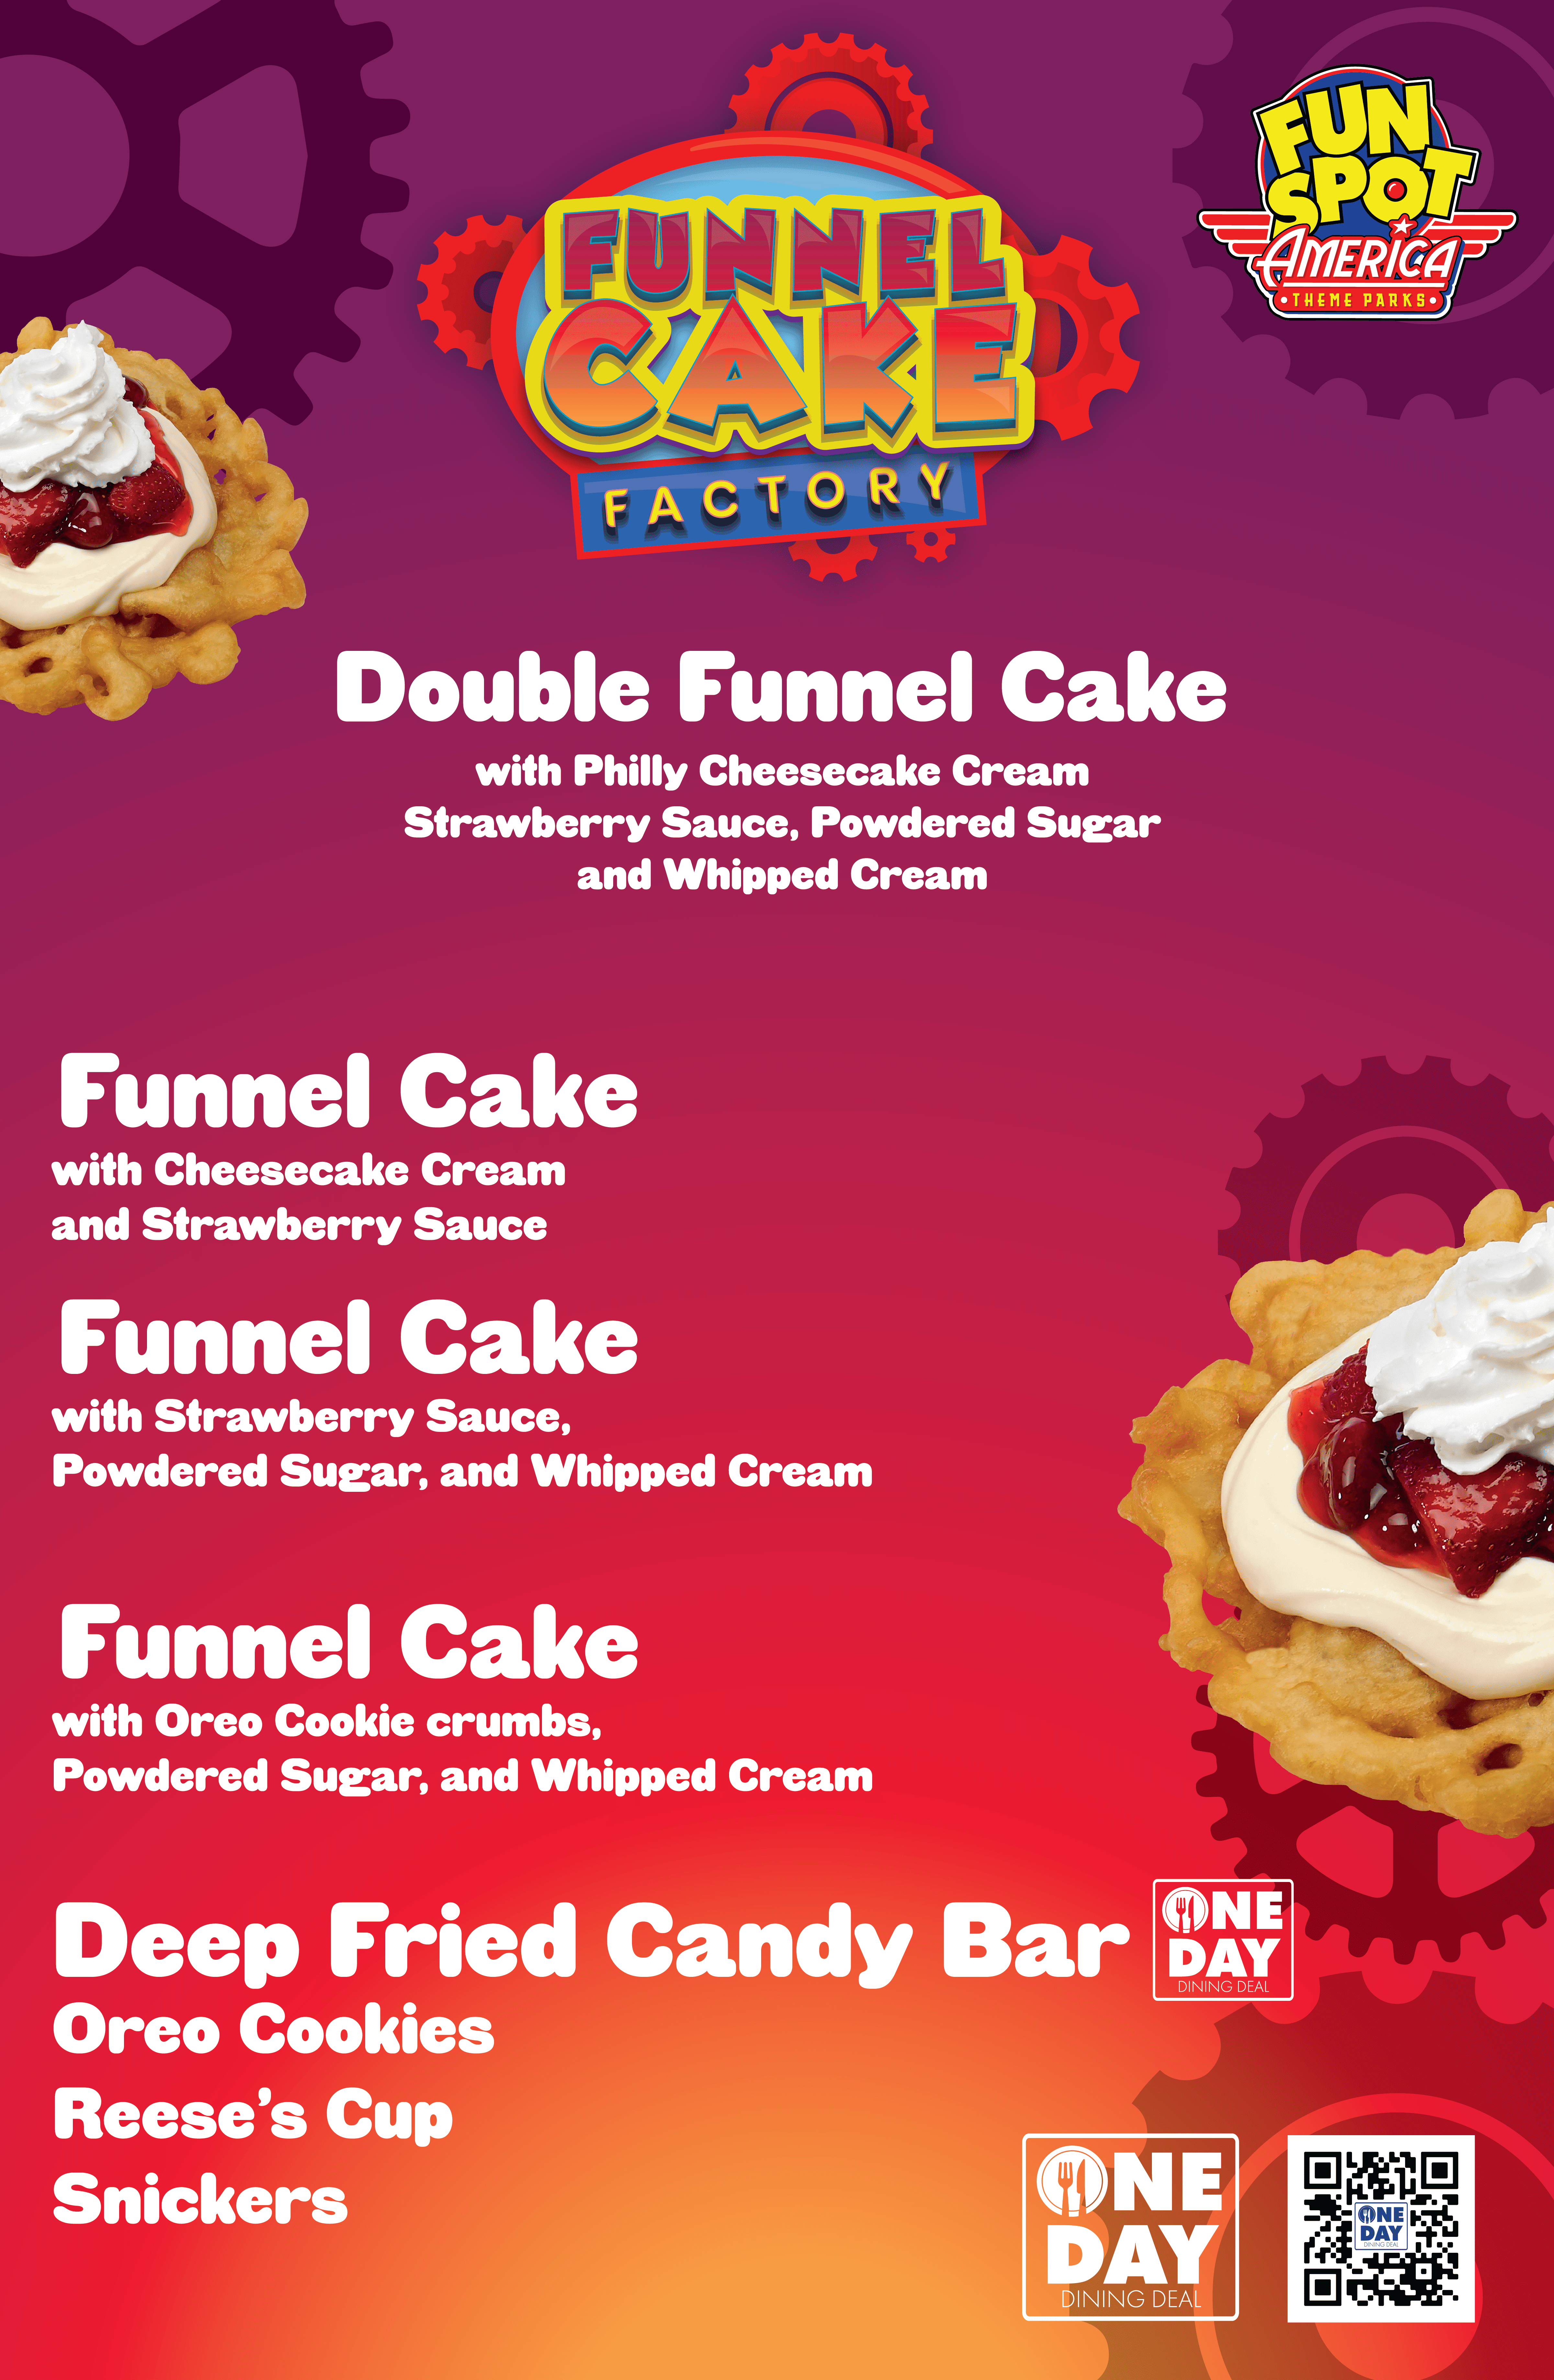 Funnel Cakes at Disneyland - Food at Disneyland